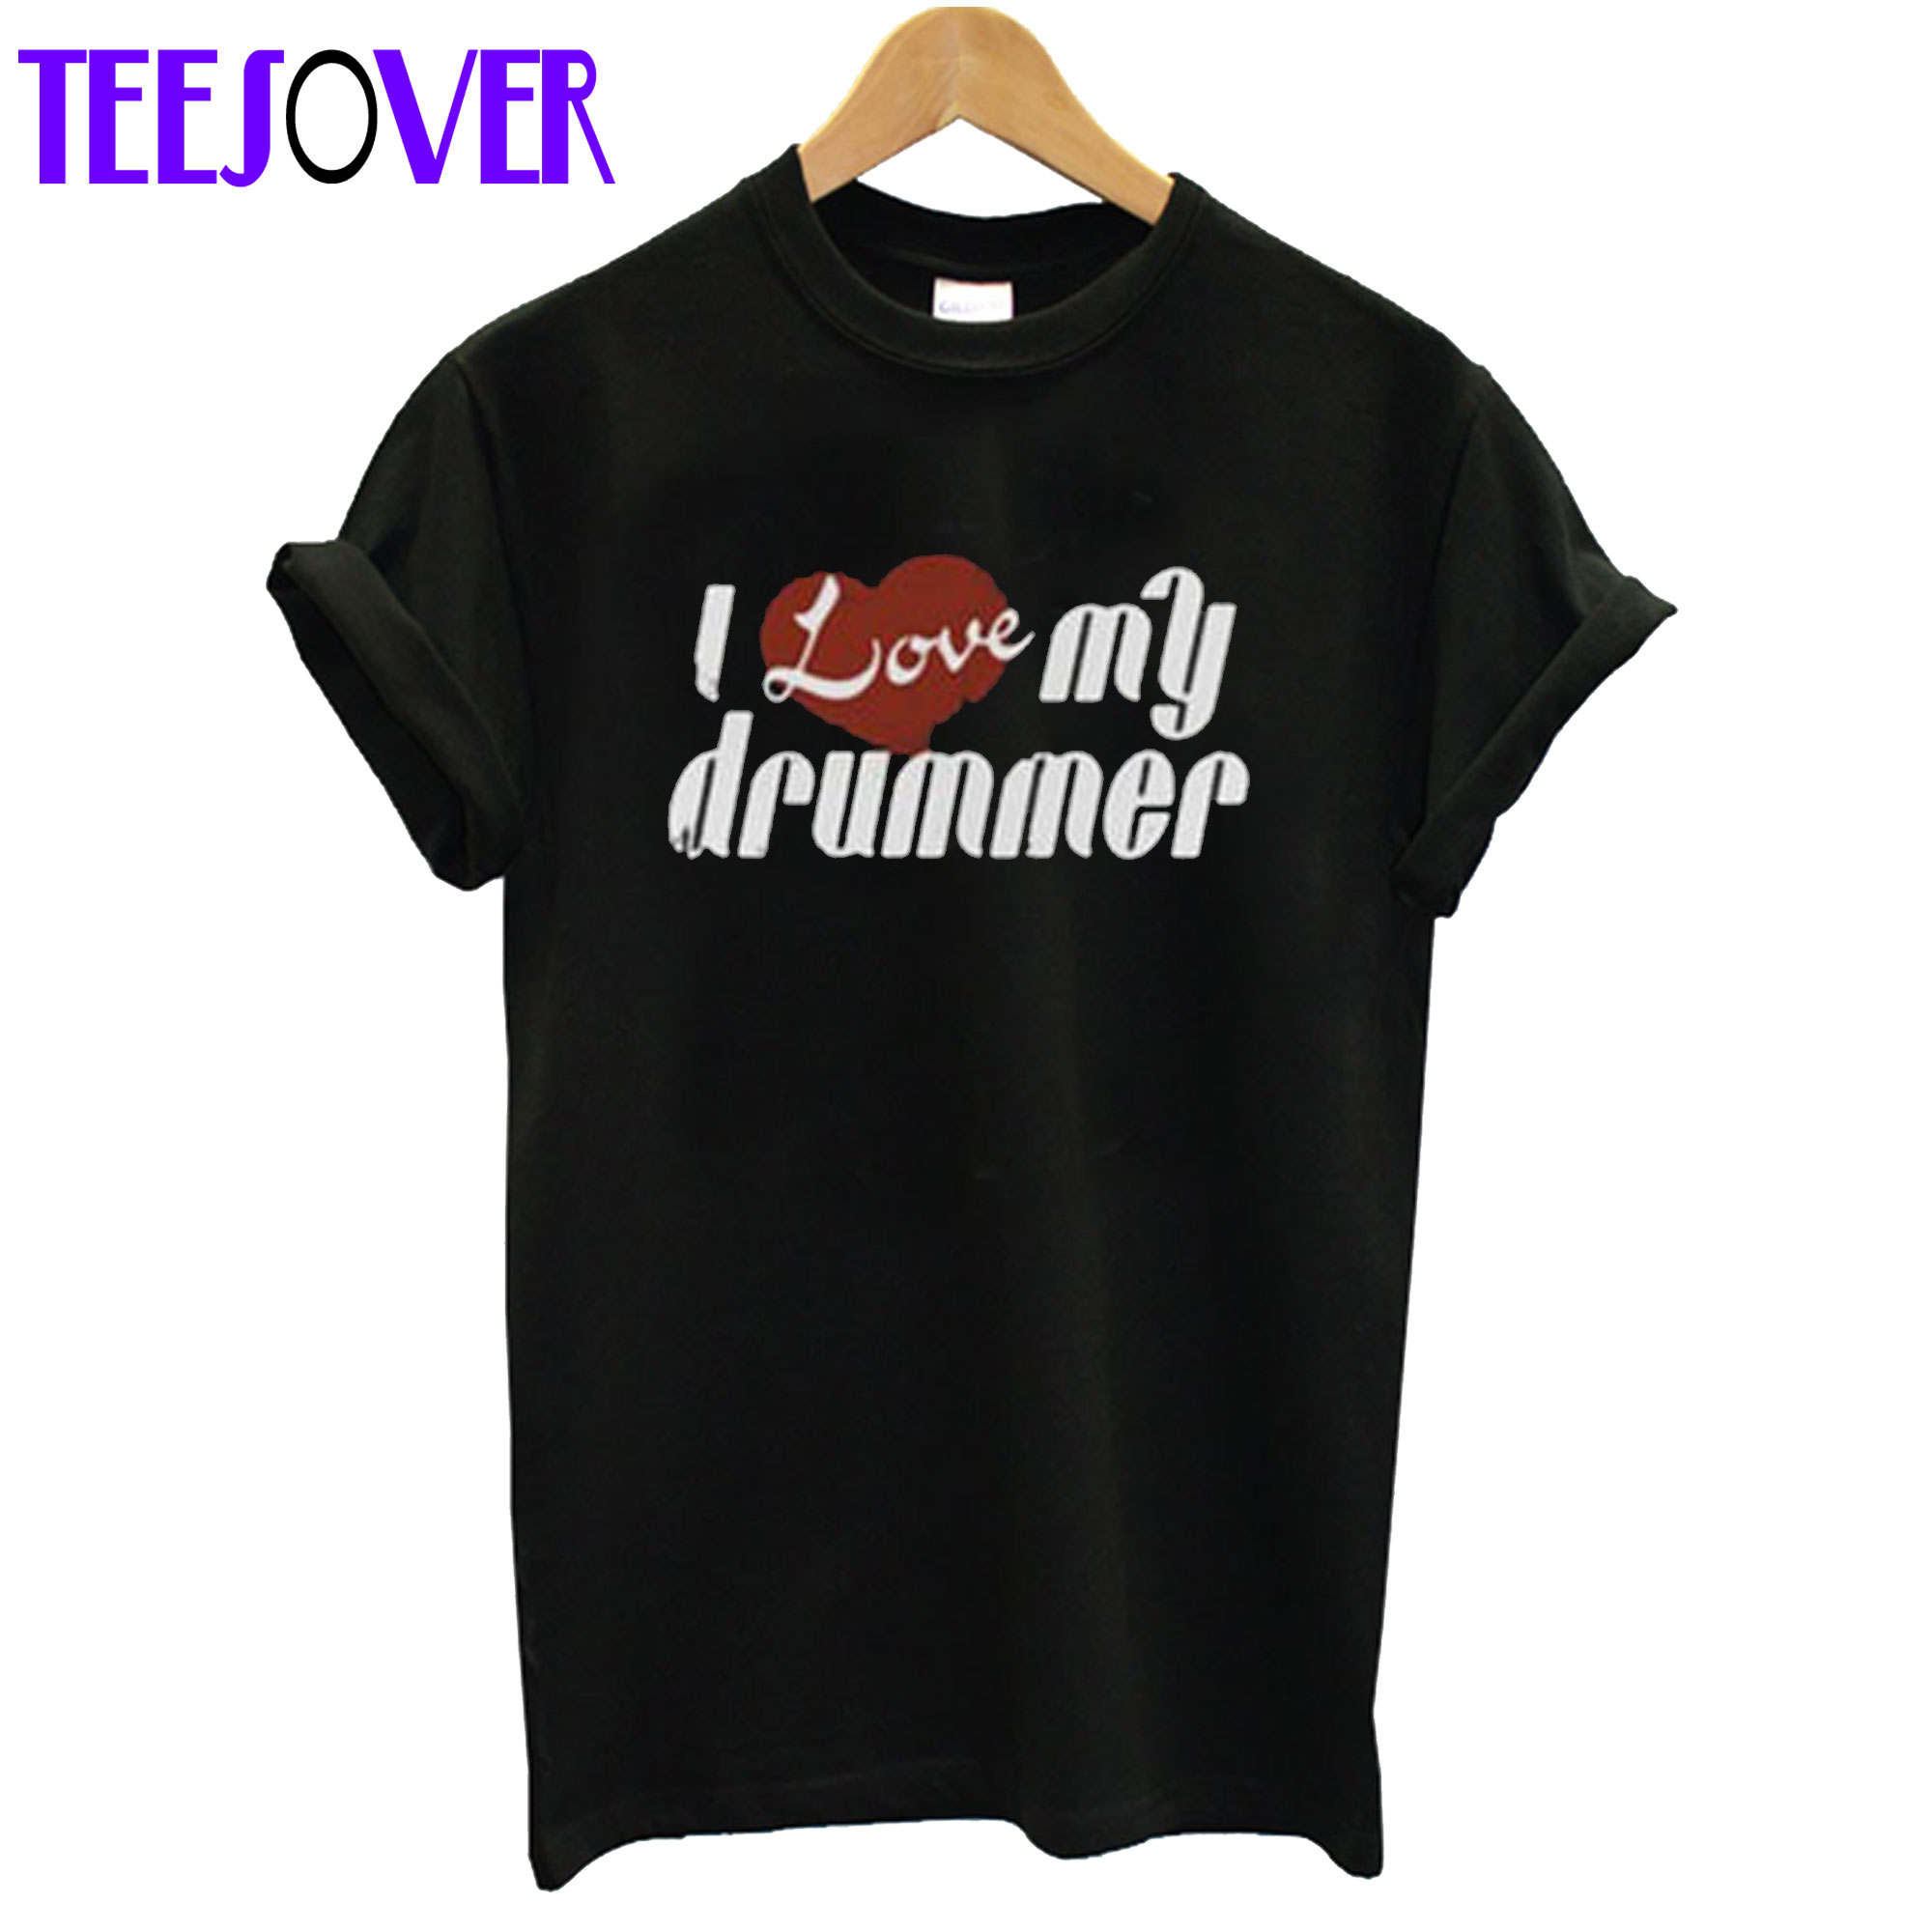 I Love My Drummer T-Shirt